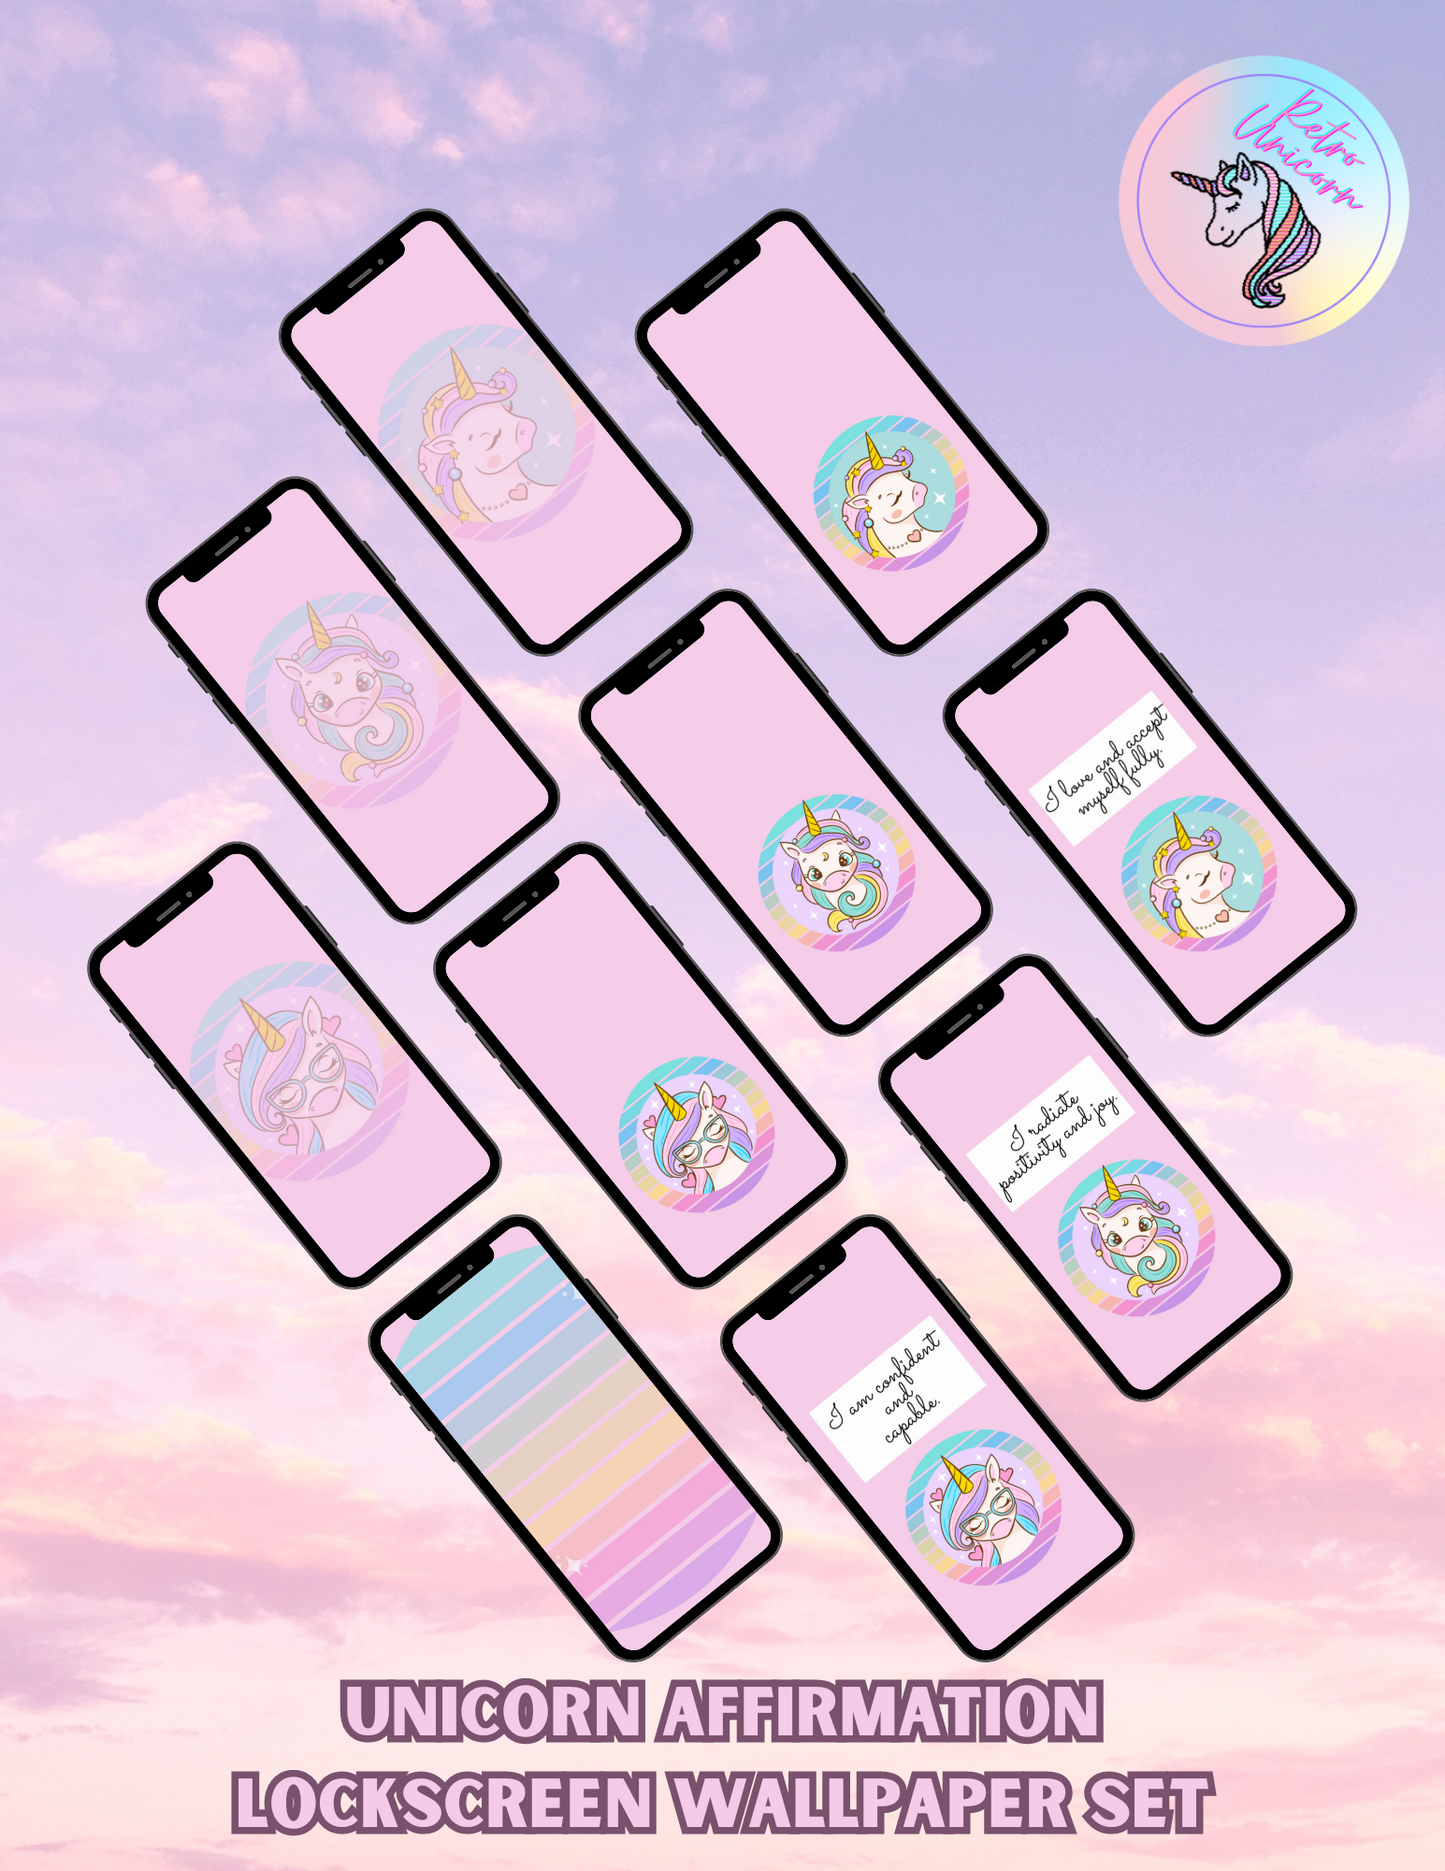 Unicorn Affirmation Phone Wallpapers [Set of 22]